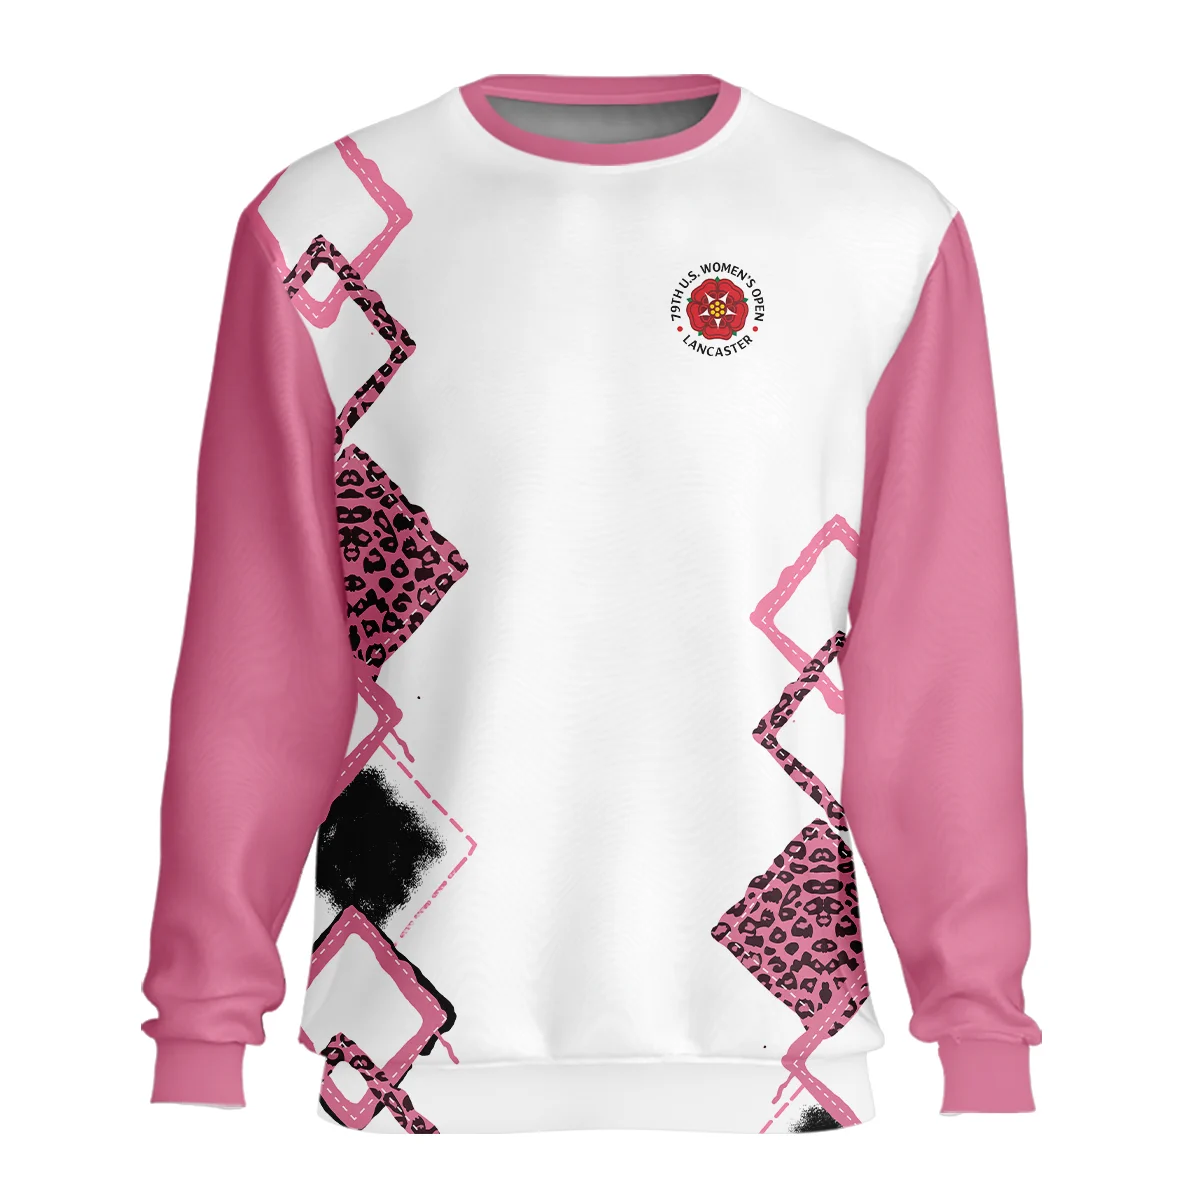 Leopard Golf Color Pink 79th U.S. Women’s Open Lancaster Zipper Polo Shirt Pink Color All Over Print Zipper Polo Shirt For Woman